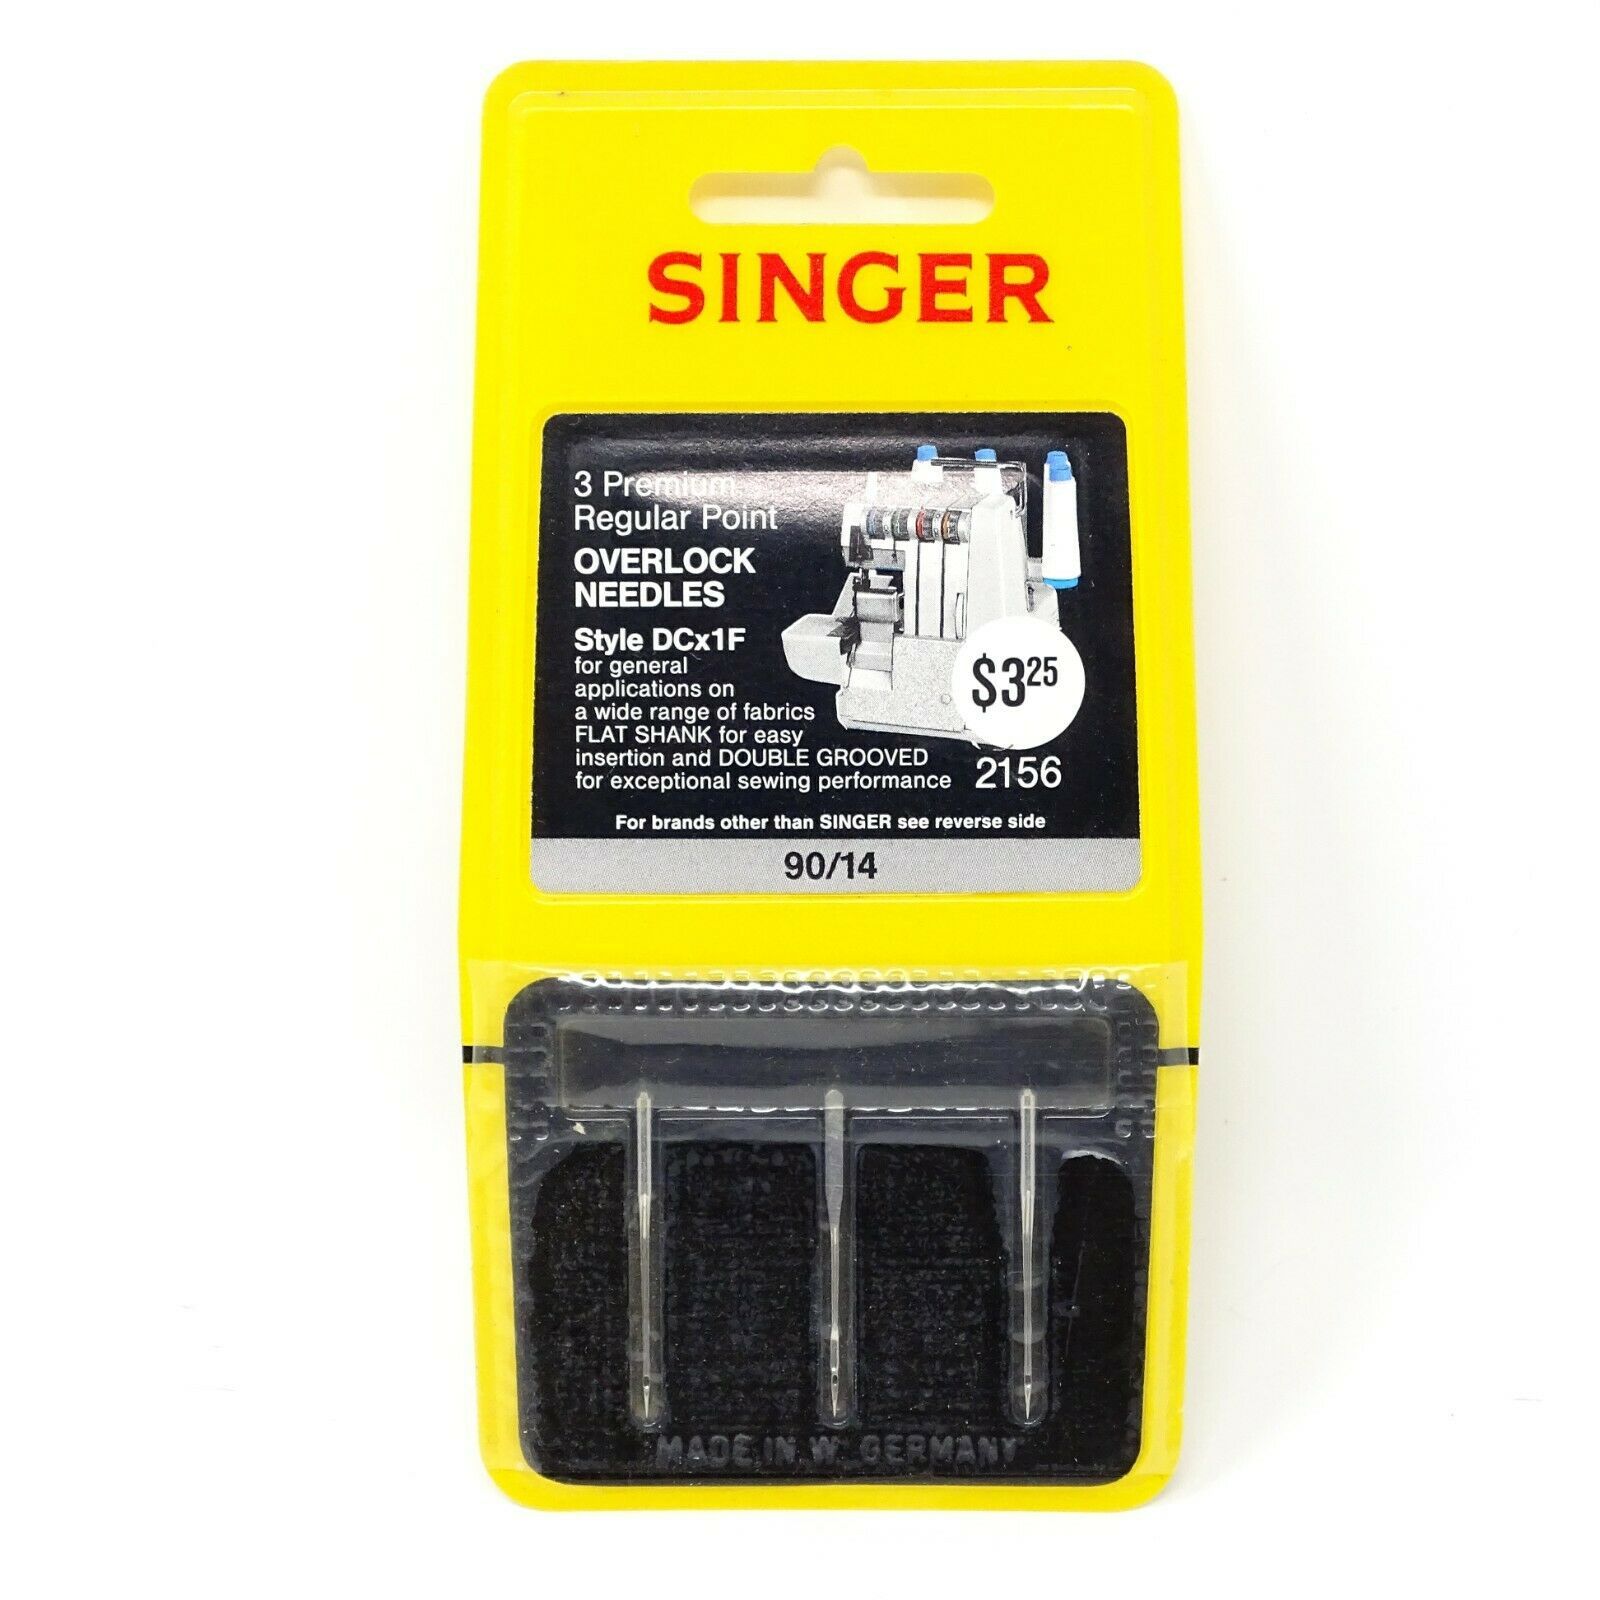 Vintage Singer Serger Needles 3 Premium Regular Point Overlock DCx1F 90/14 2156 - $14.01